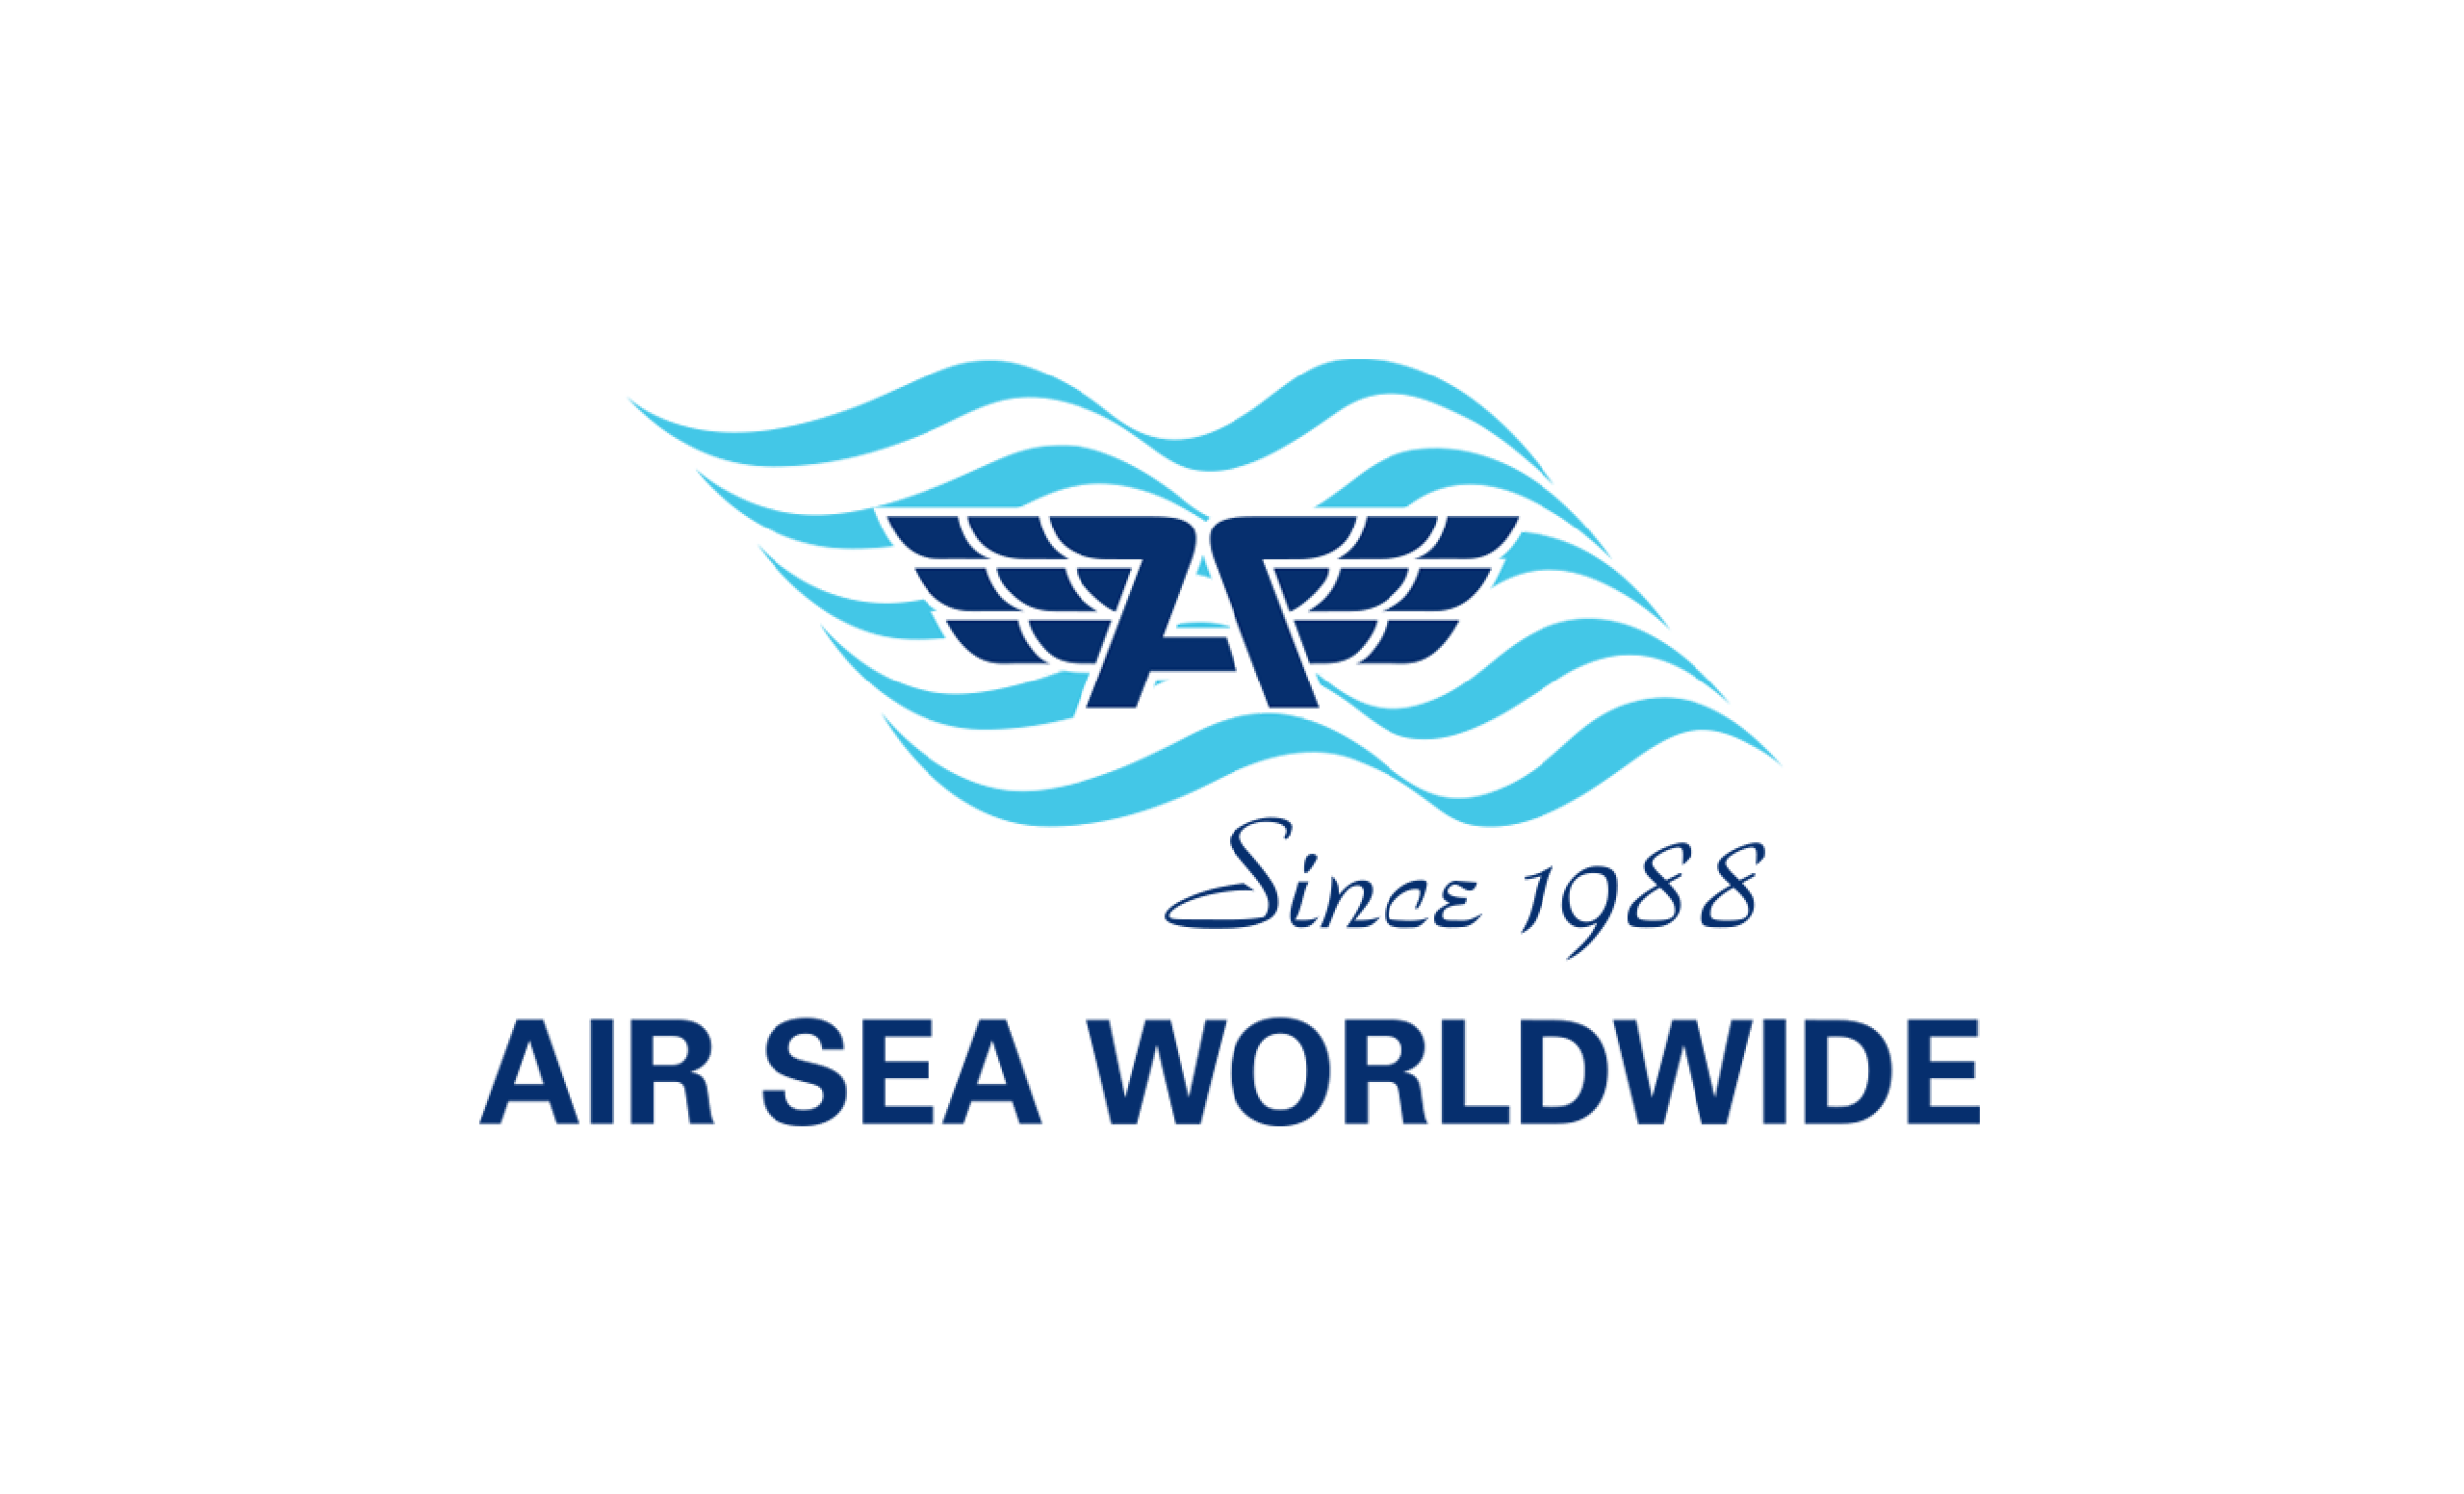 Air Sea Worldwide